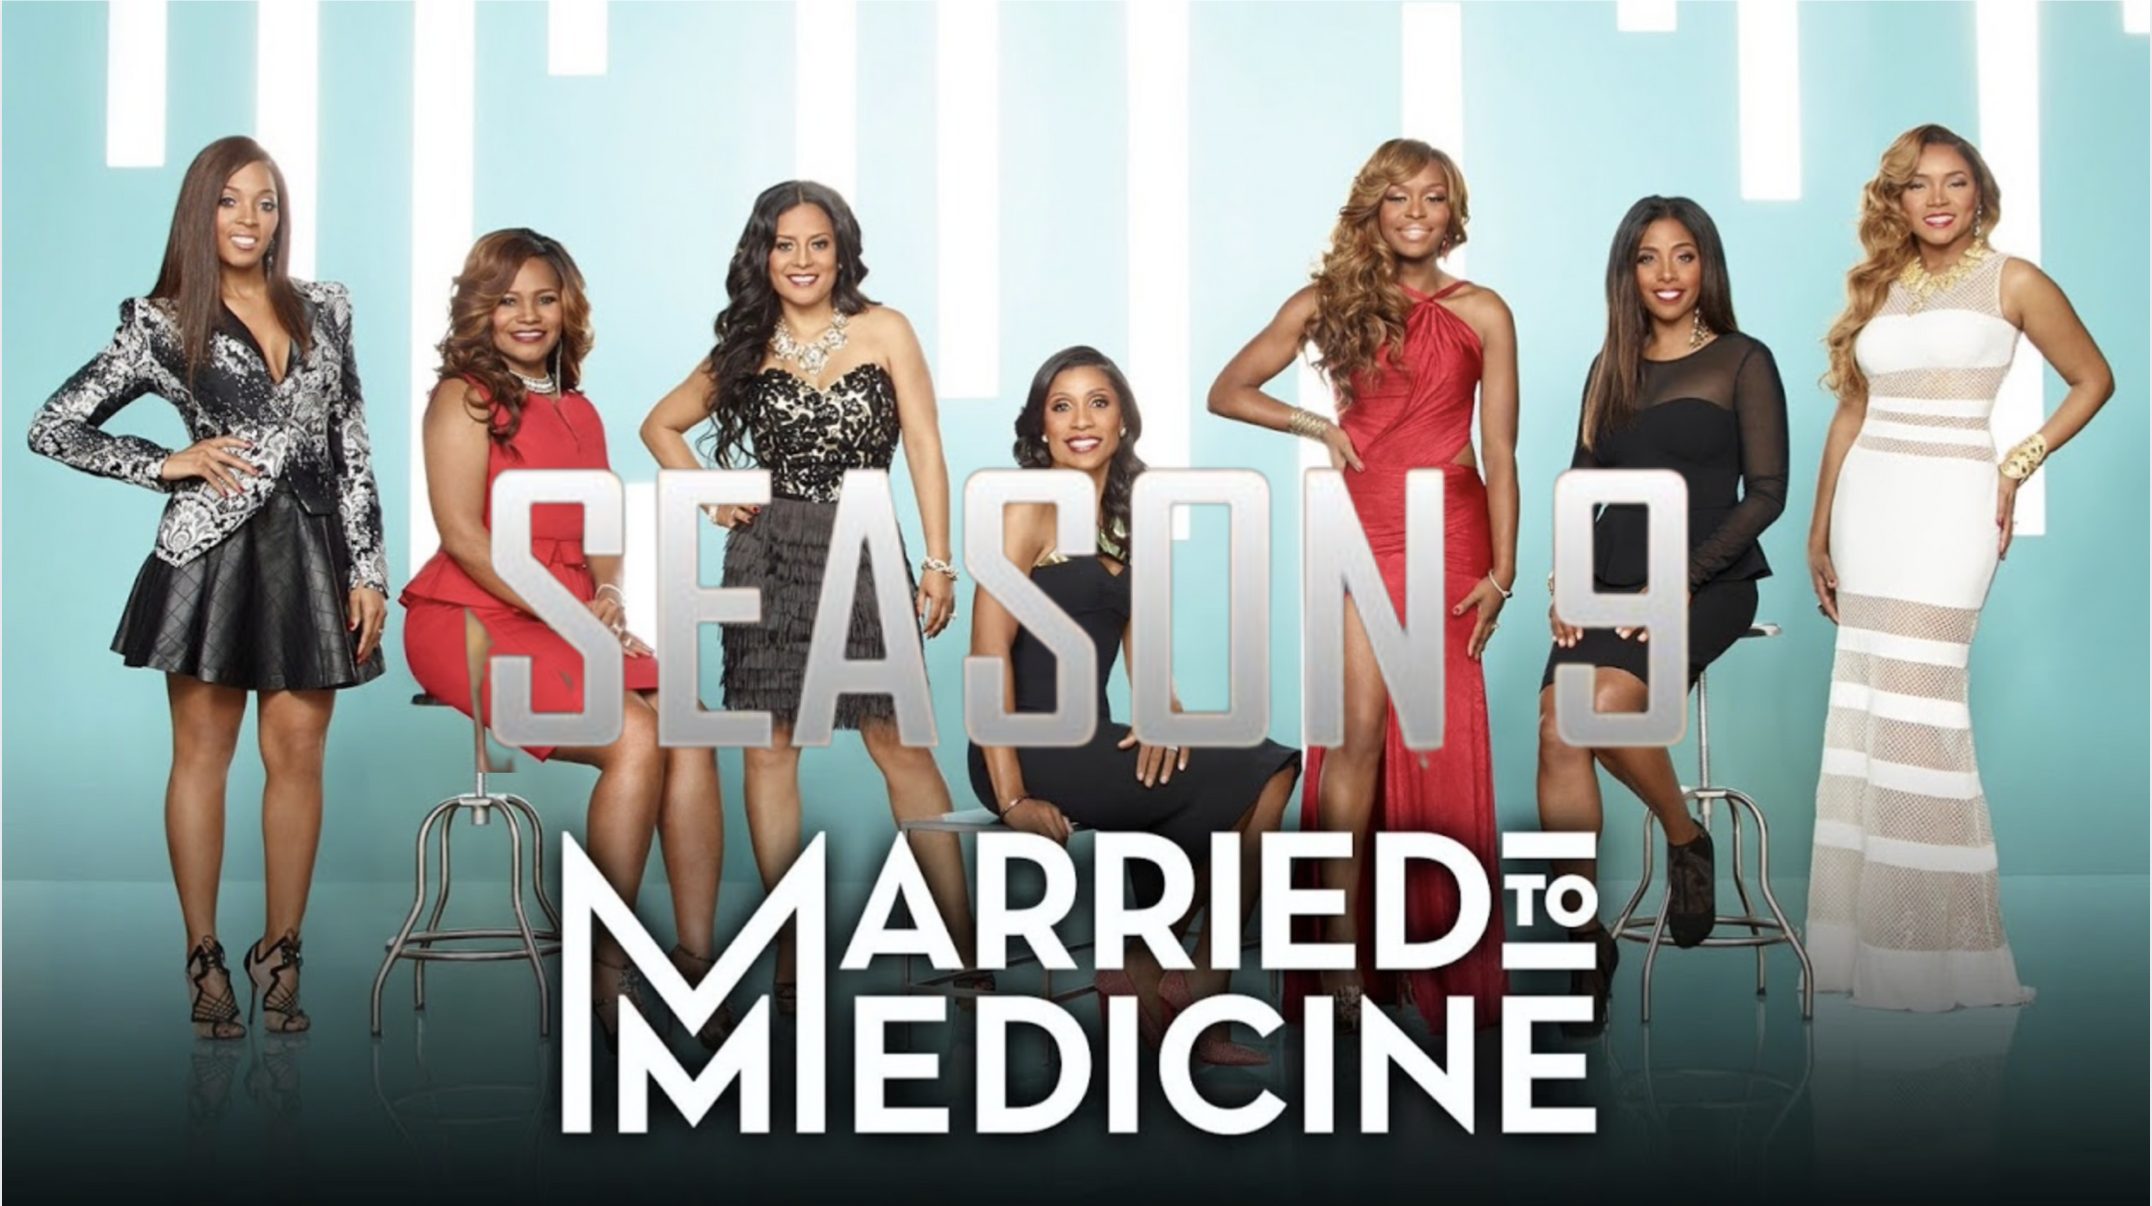 Married to Medicine Season 9